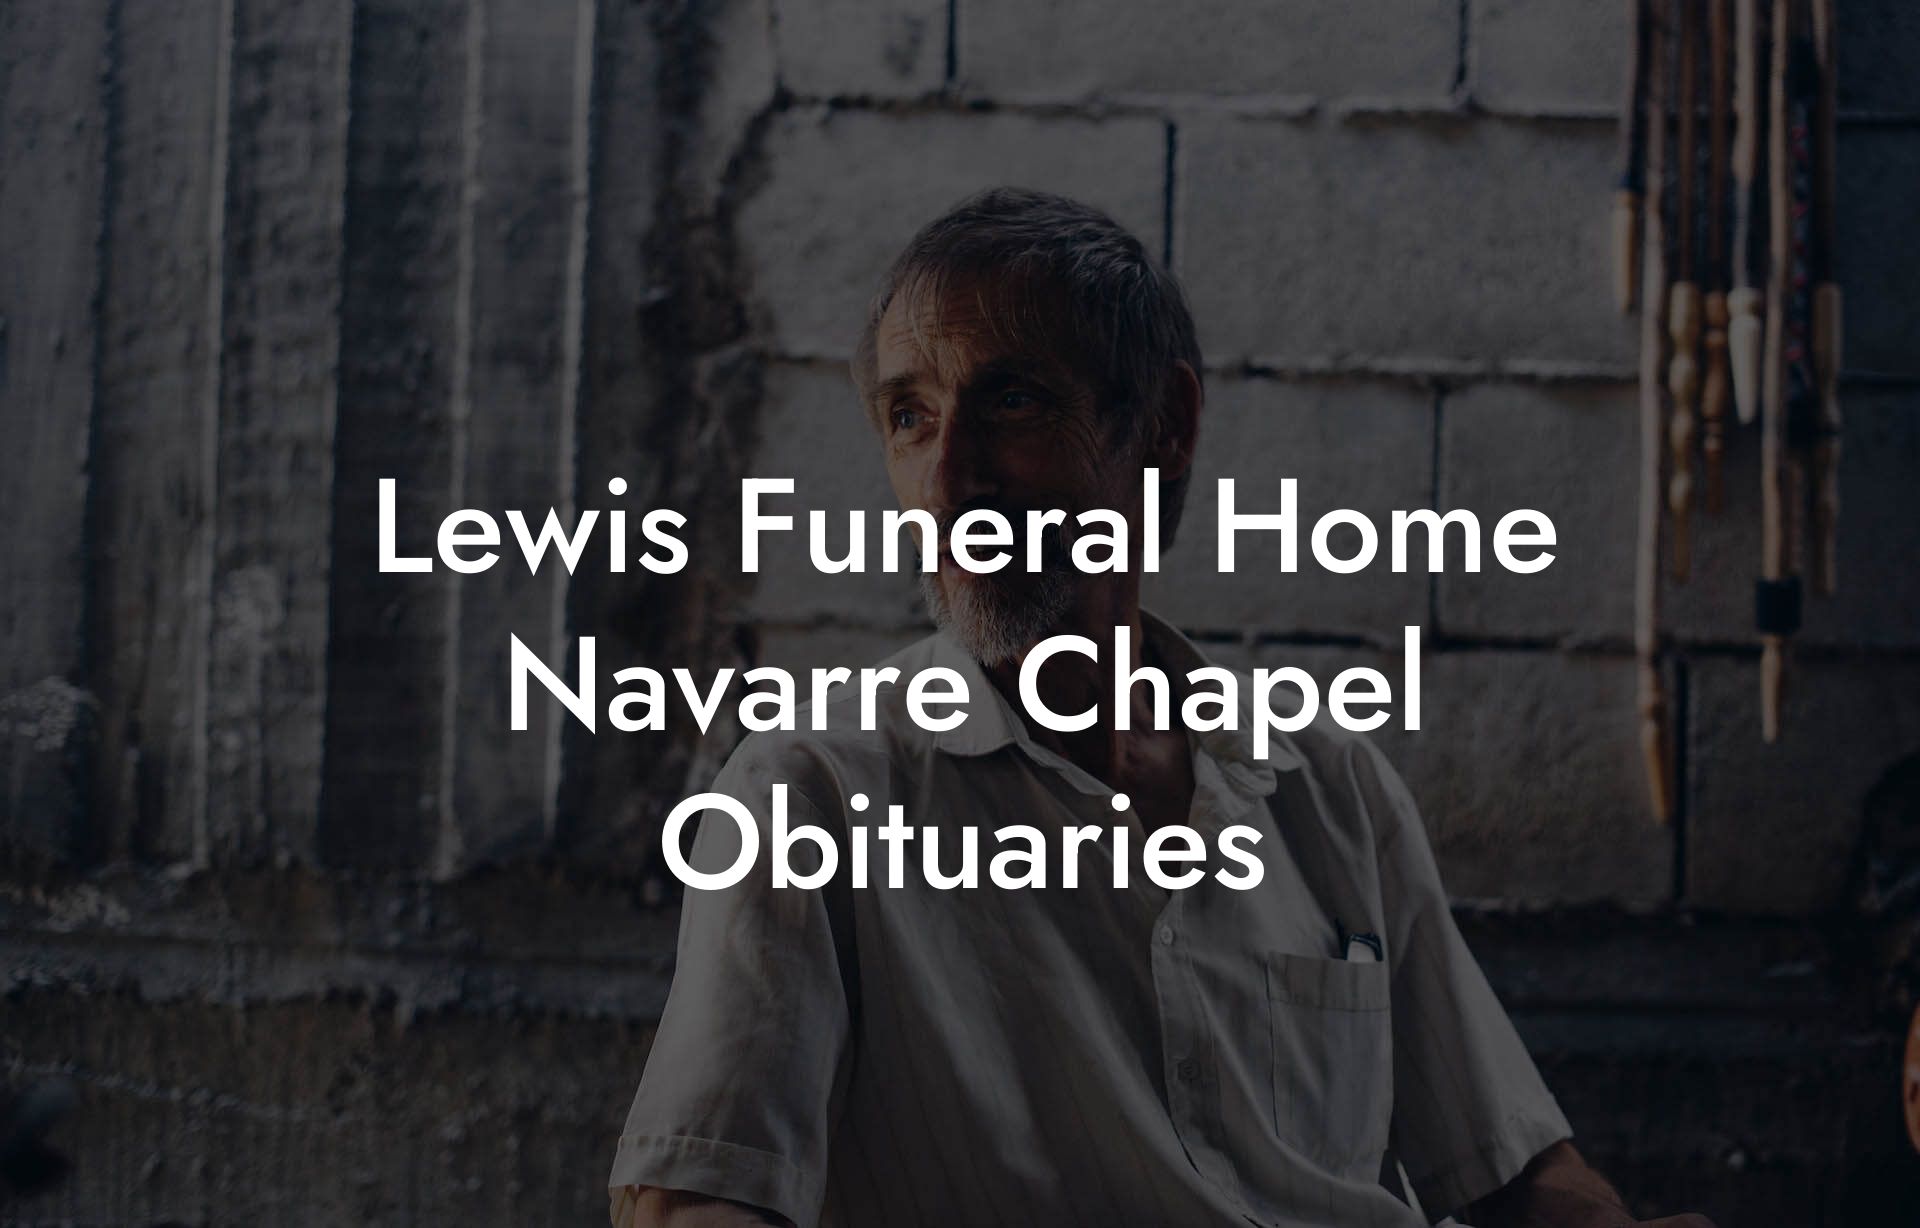 Lewis Funeral Home Navarre Chapel Obituaries